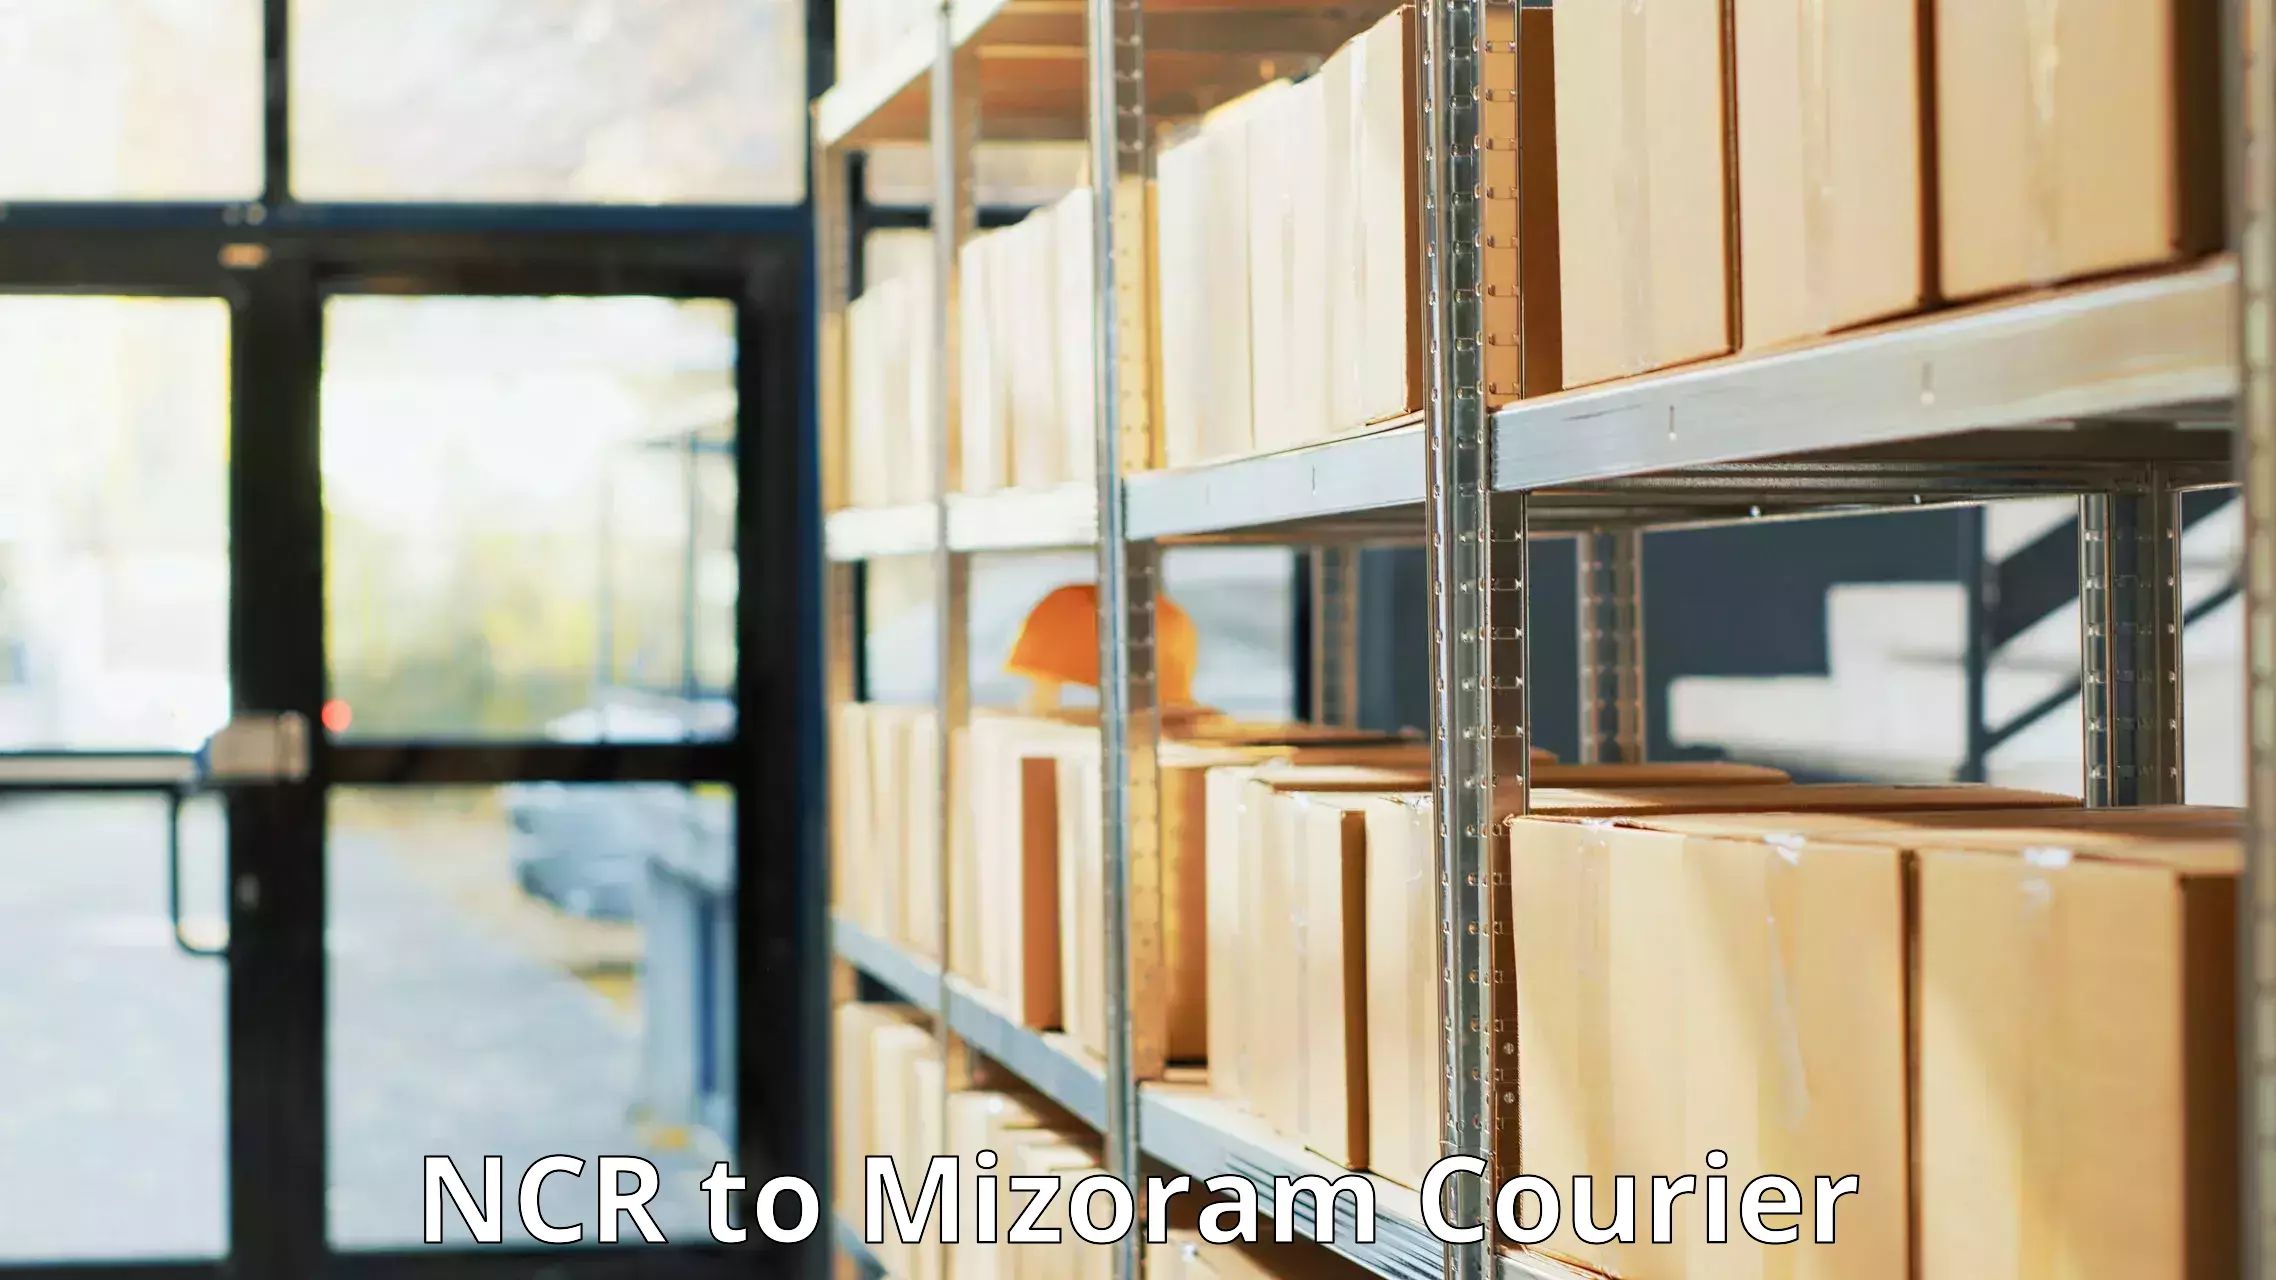 Urgent courier needs NCR to Mizoram